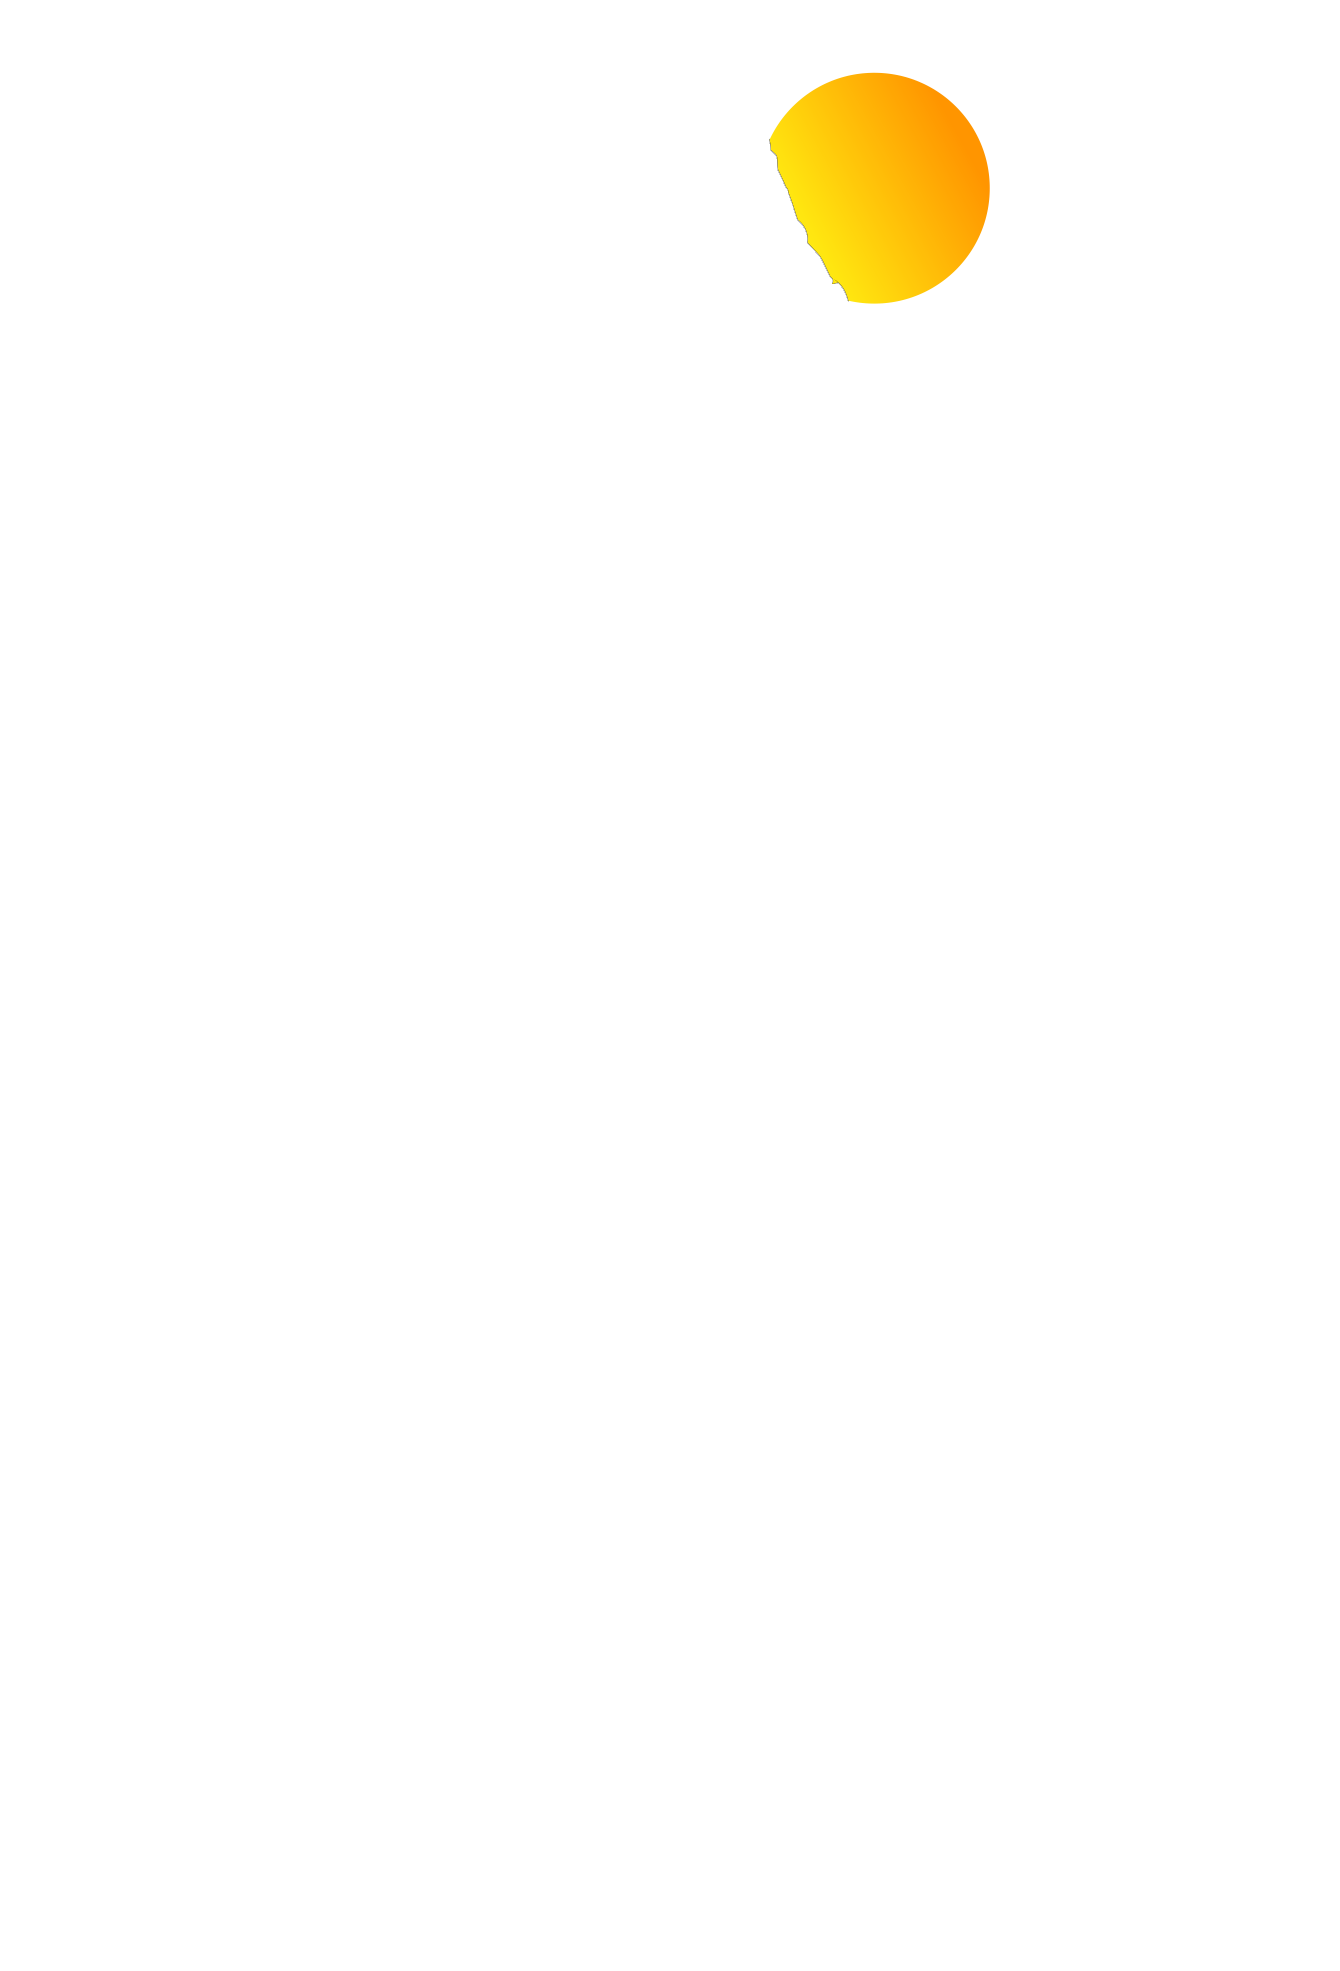 Akanic Productions